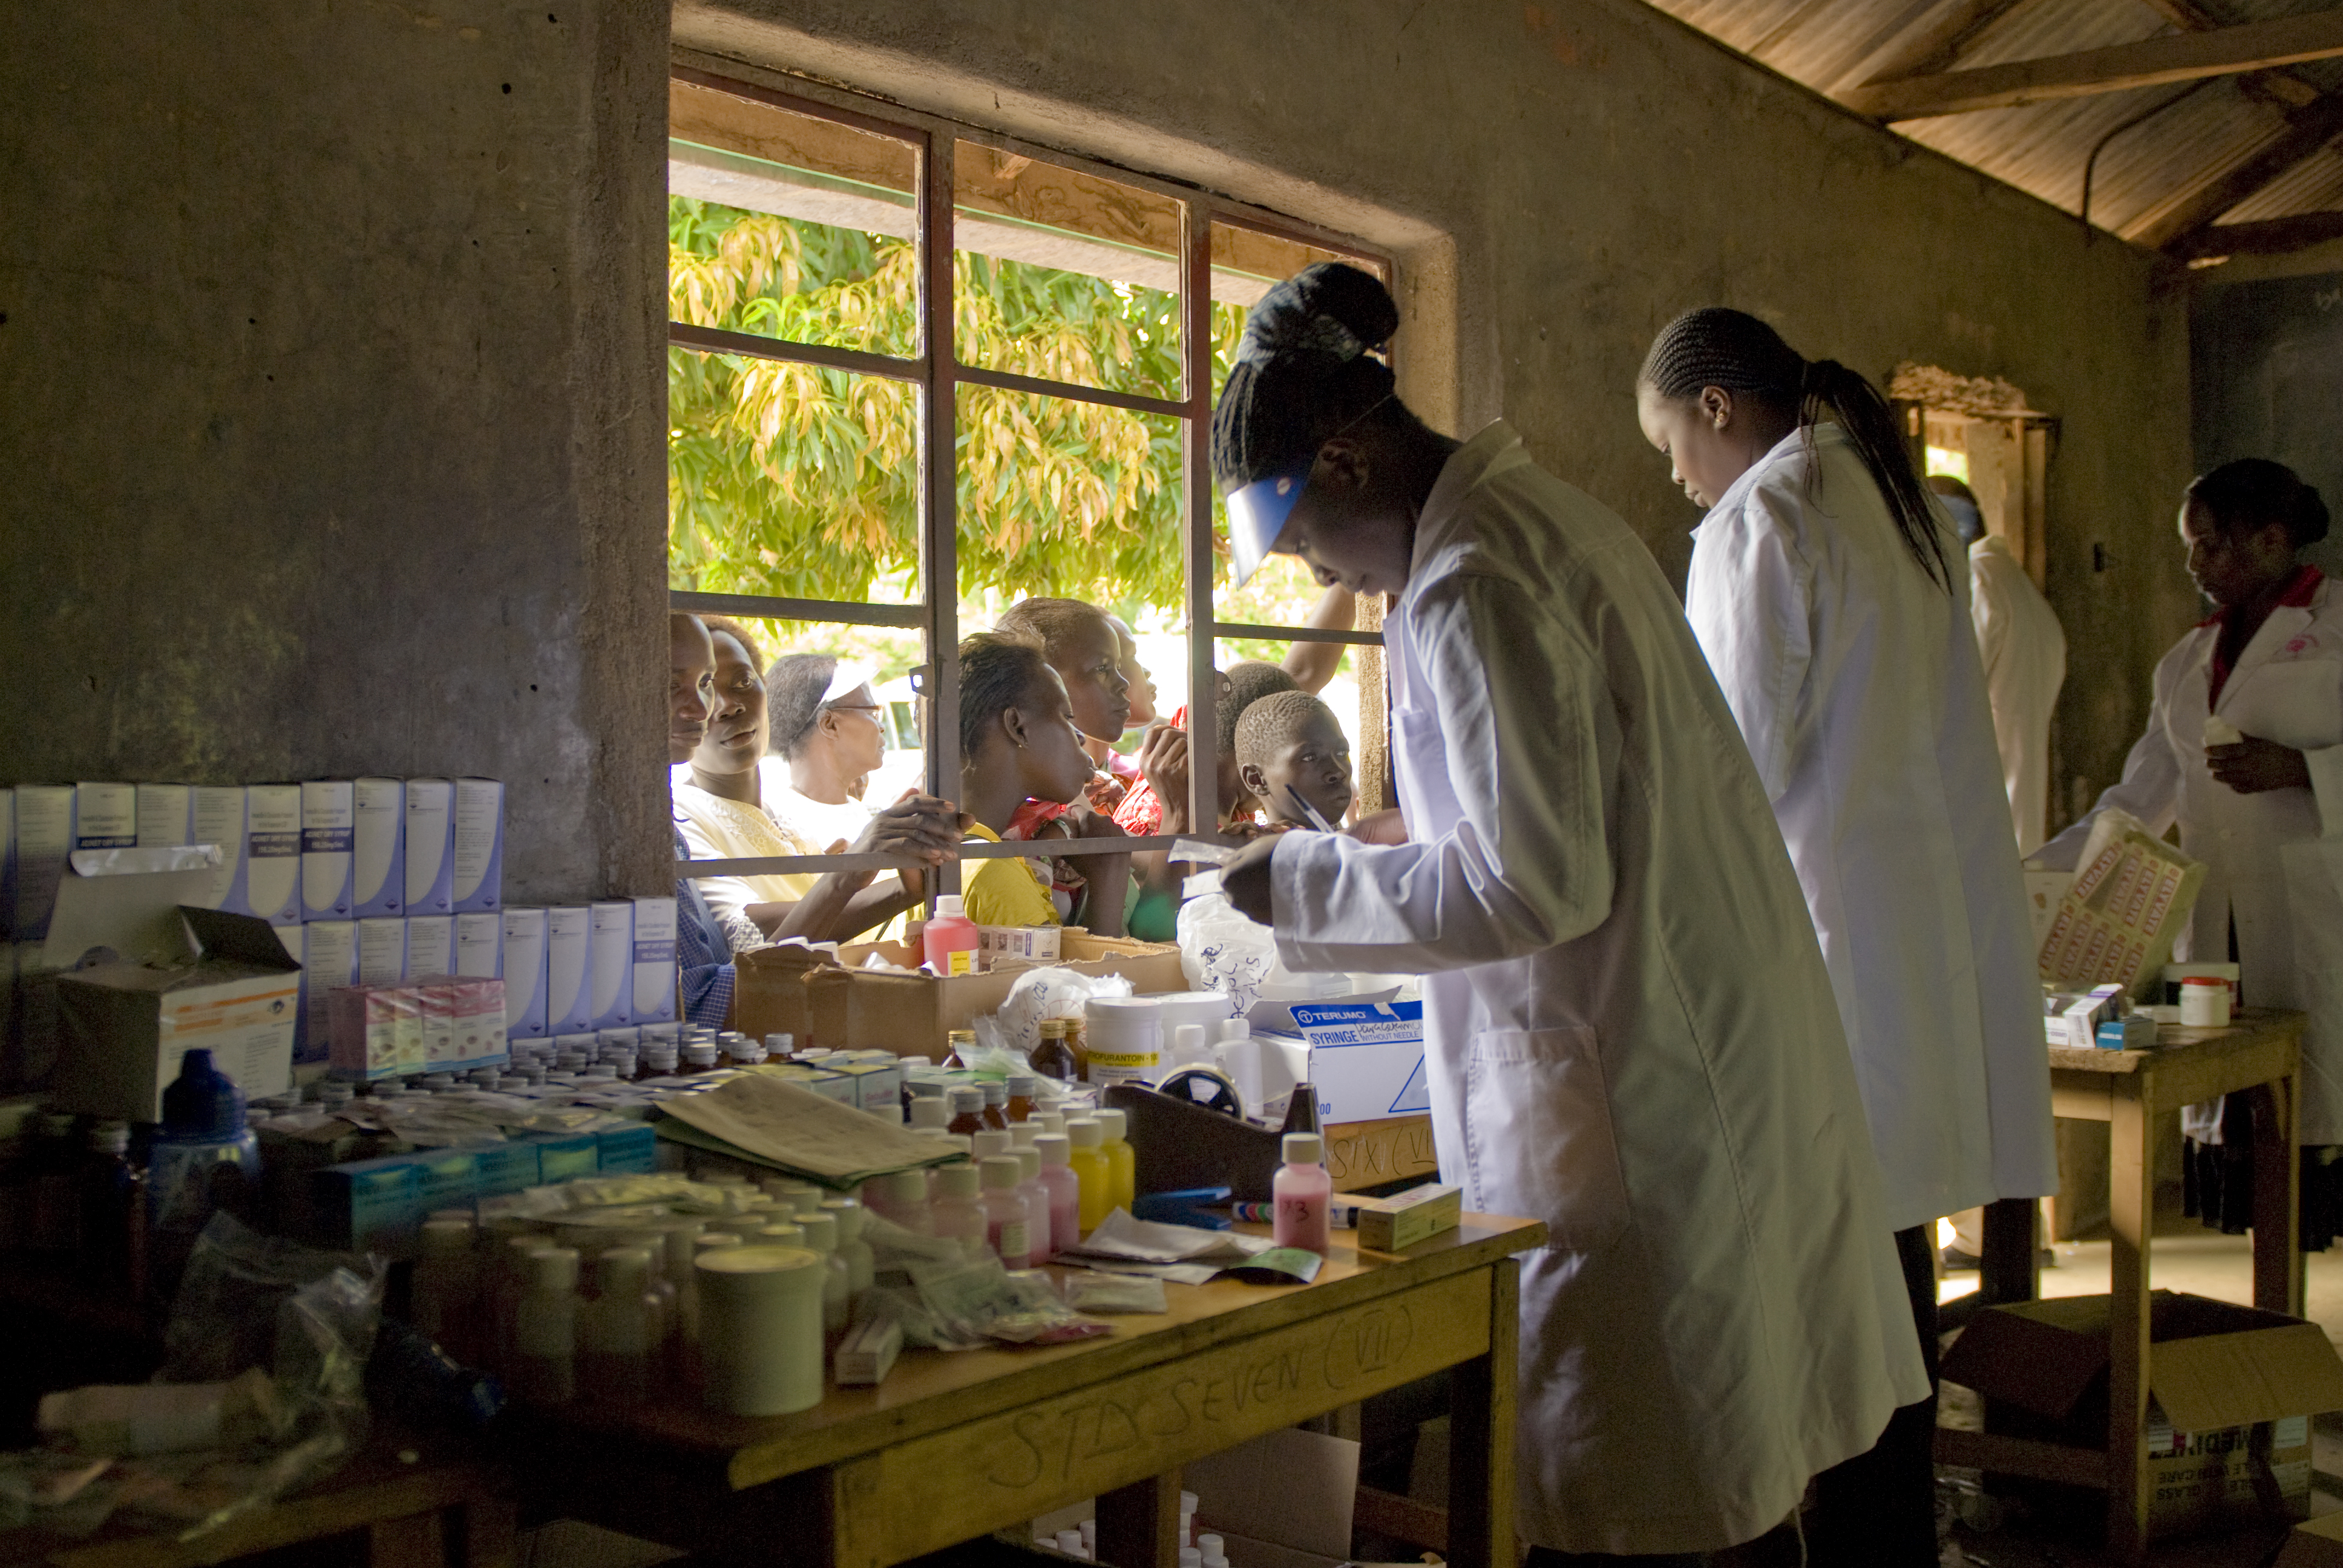 U.S. Army medical researchers take part in World Malaria Day 2010, Kisumu, Kenya April 25, 2010 U.S. Army photo by Rick Scavetta, U.S. Army Africa Public Affairs